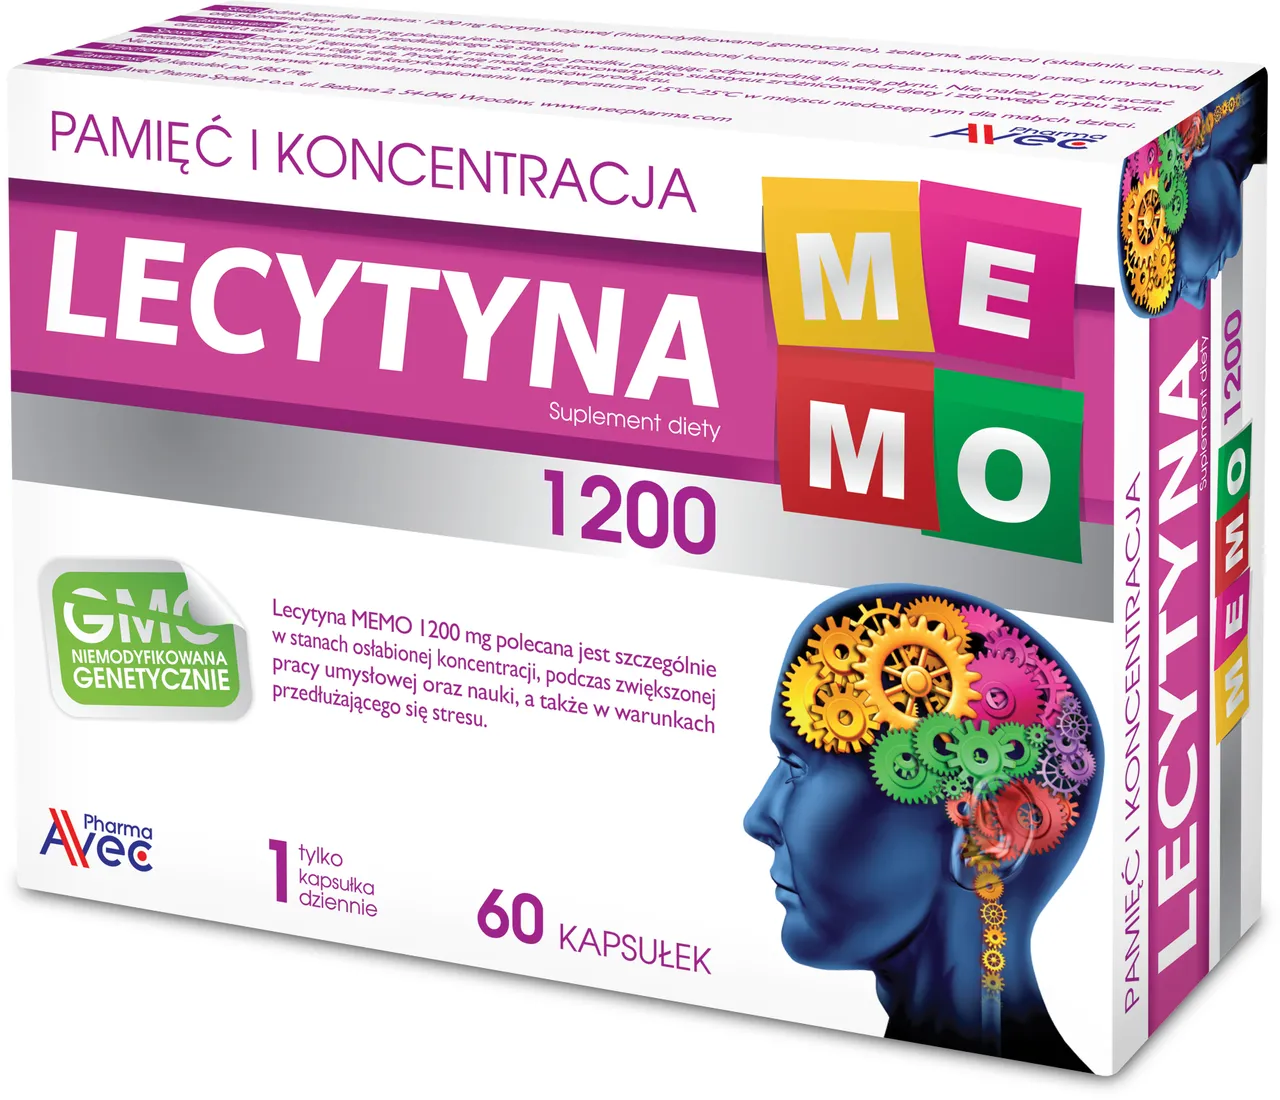 Lecytyna MEMO 1200 mg, suplement diety, 60 kapsułek